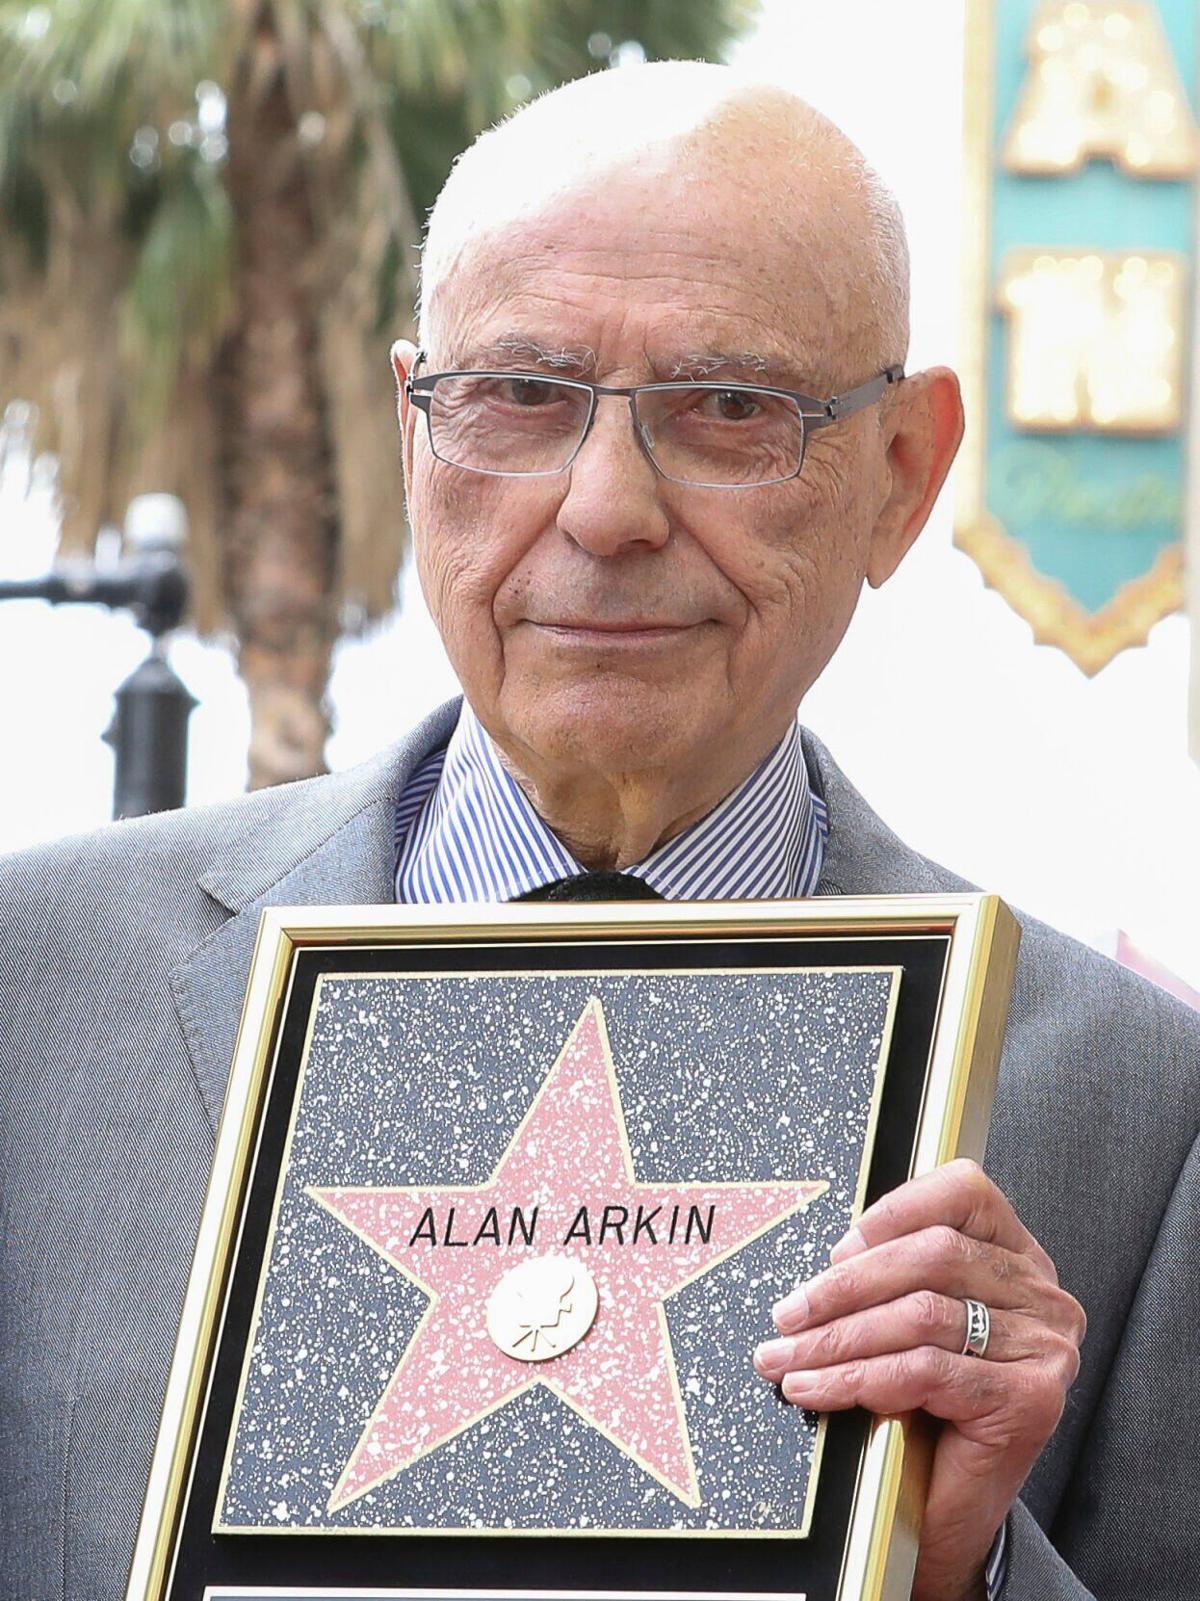 Alan Arkin, Jewish actor with uncommon versatility, dies at 89